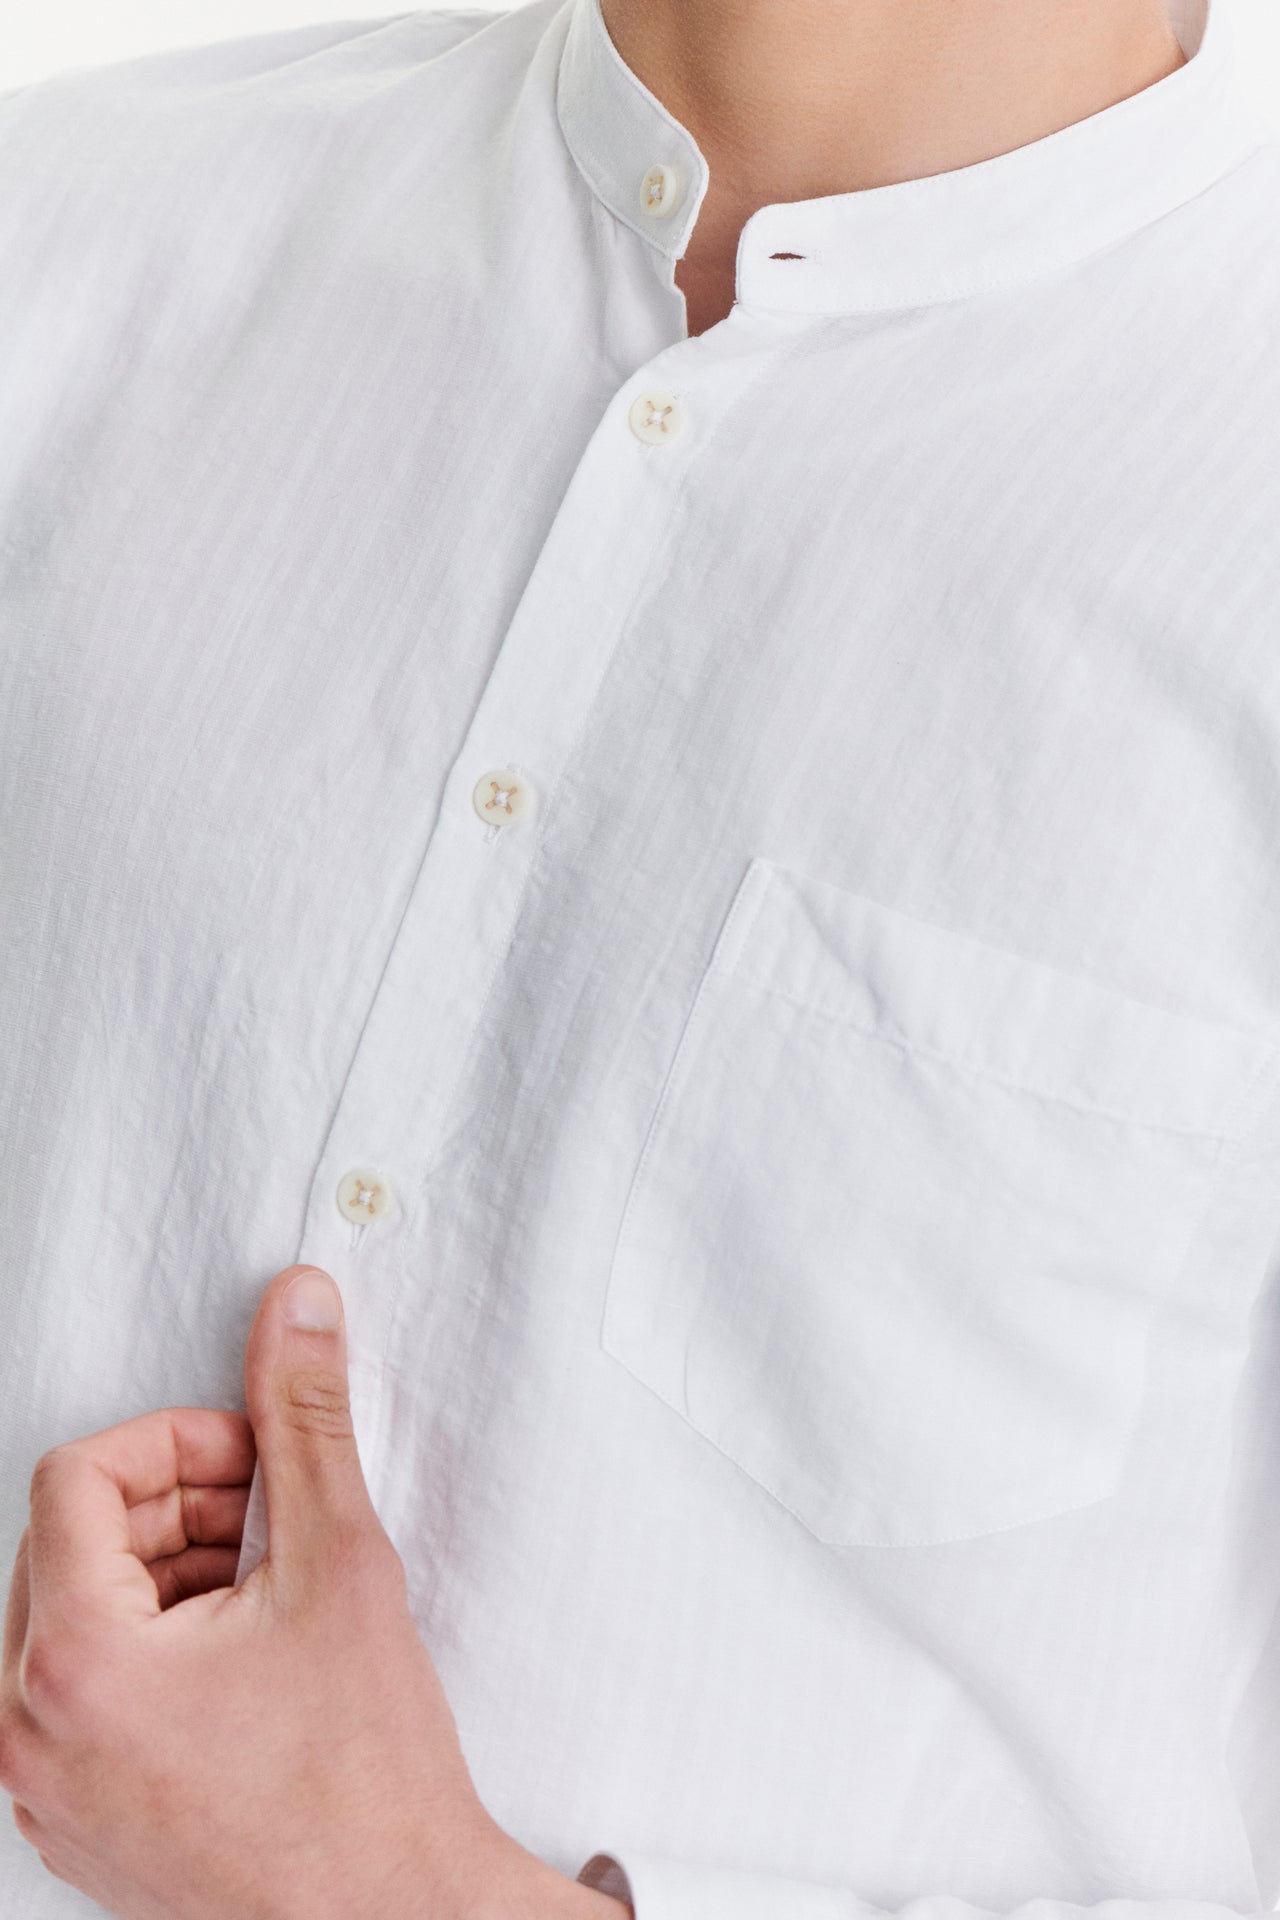 Zen Shirt in a White Portuguese Cotton and Linen Seersucker